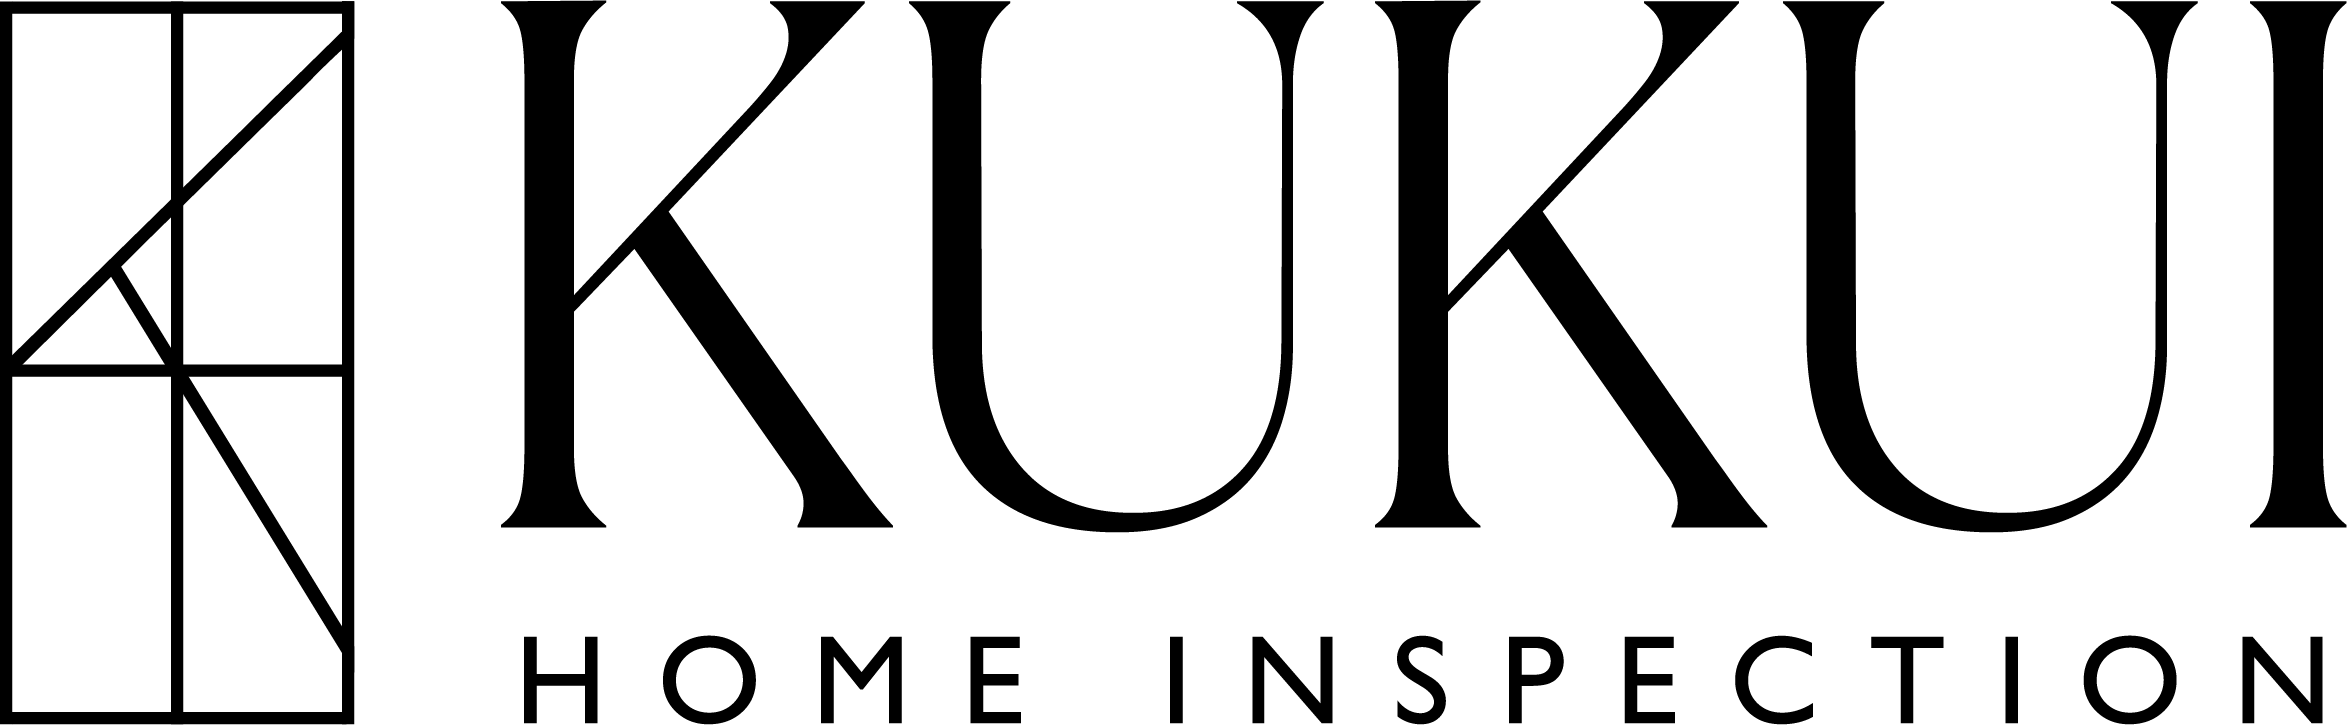 Kukui Home Inspection